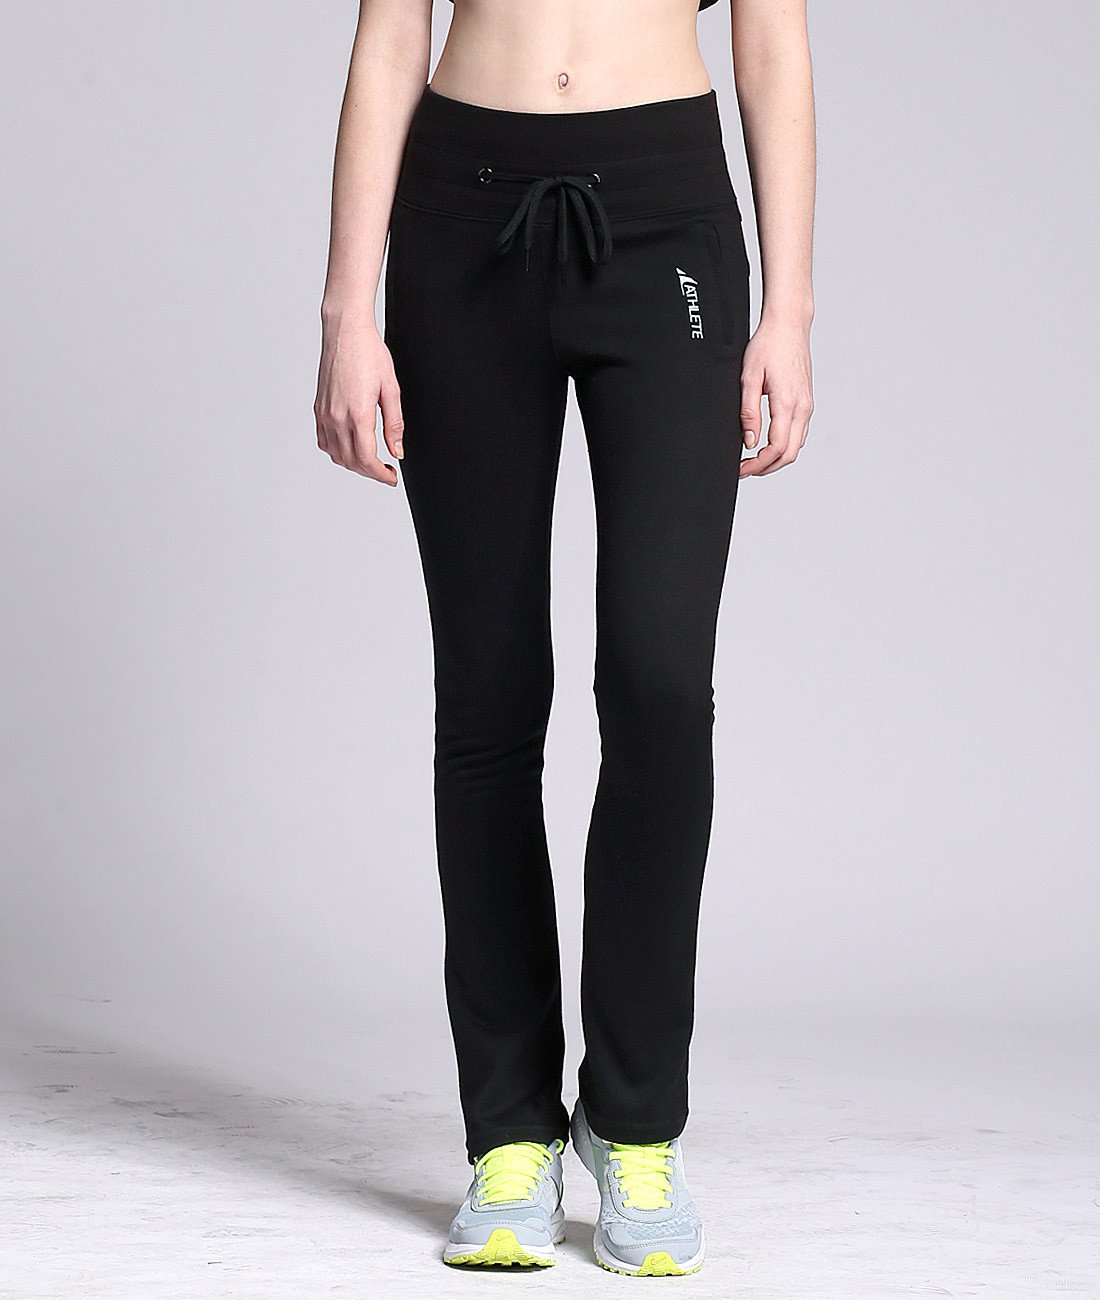 ATHLETE Women's Drawstring Workout Bootcut Pants, Style PS08